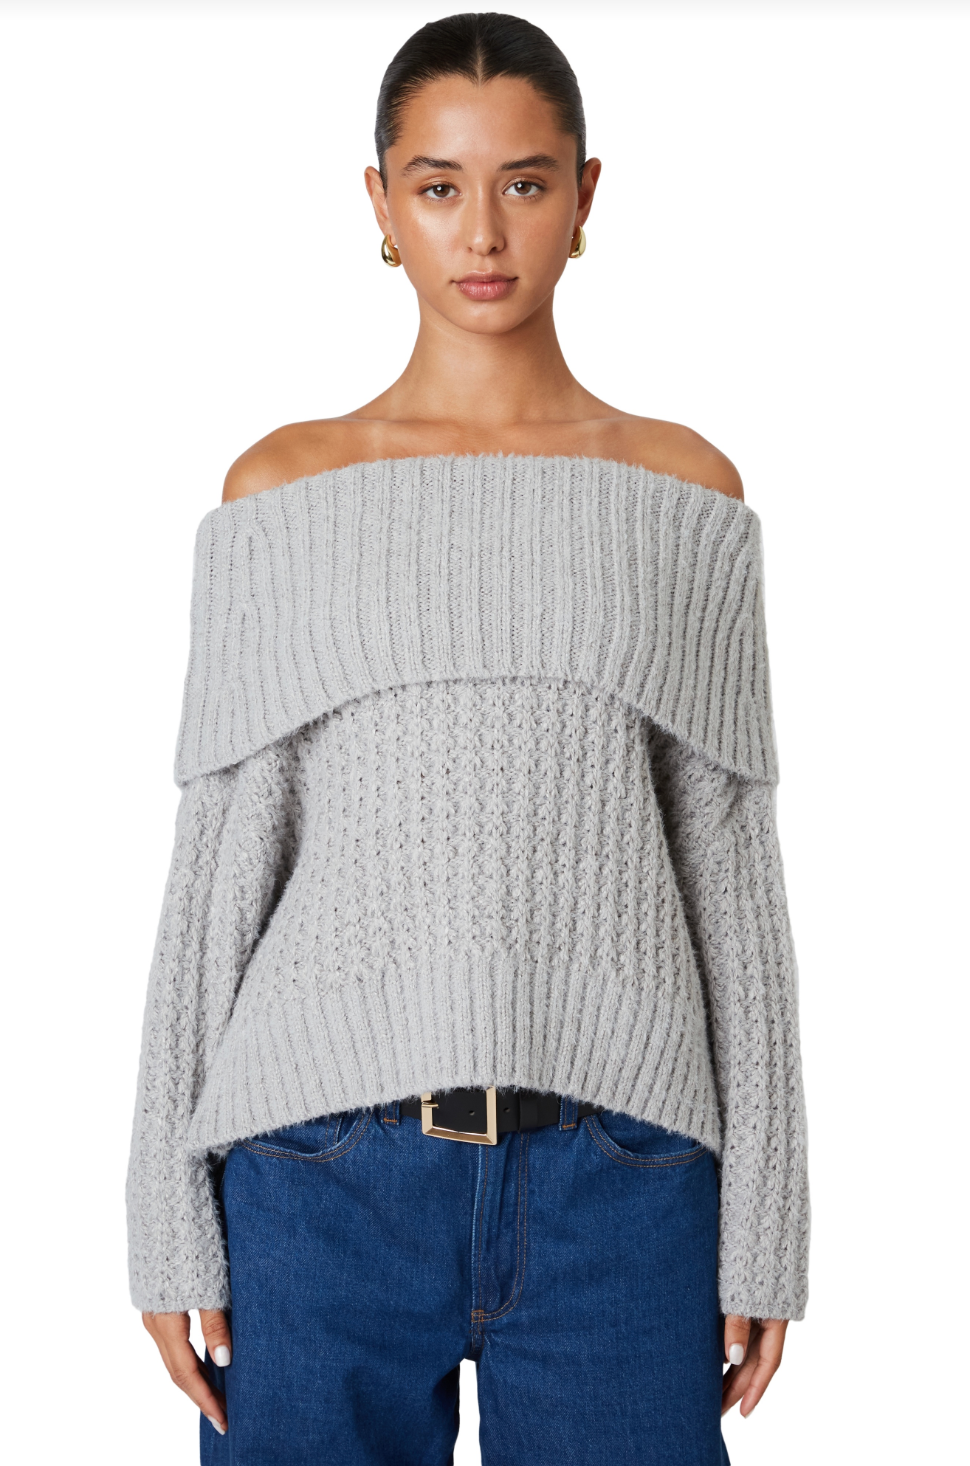 Chamonix Sweater Grey, Sweater by Nia | LIT Boutique